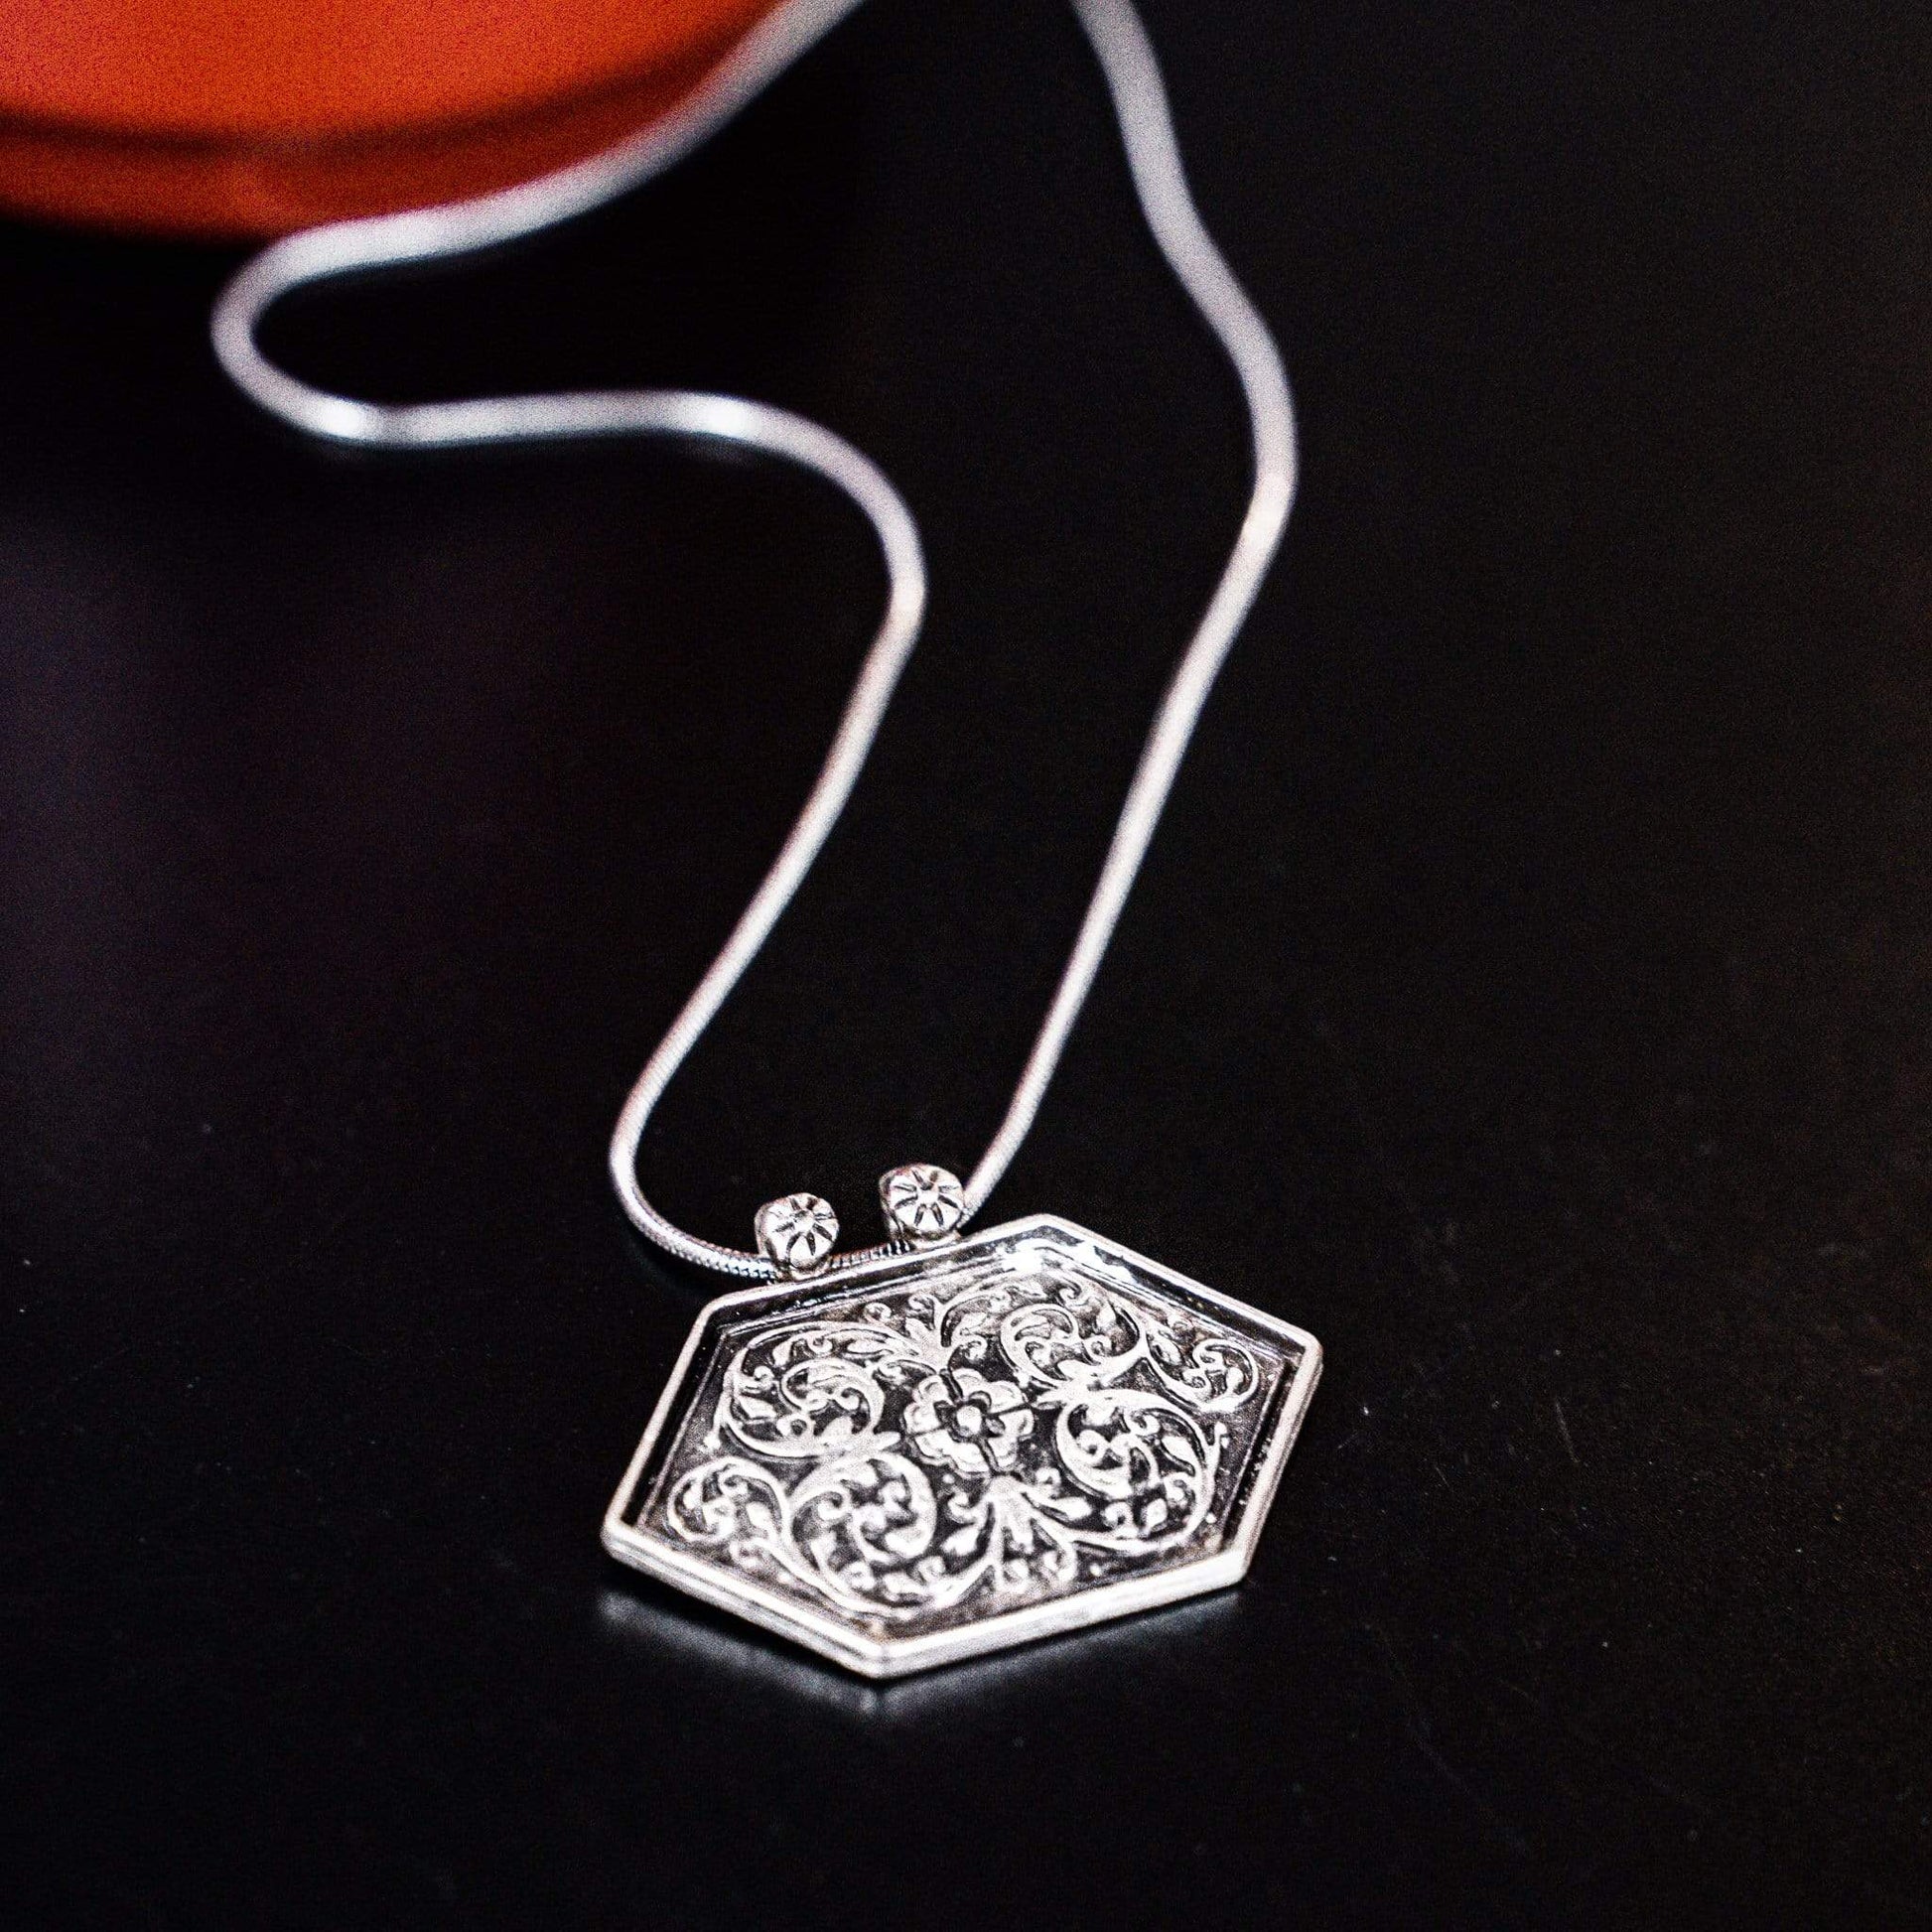 Merlin's Secret Necklace